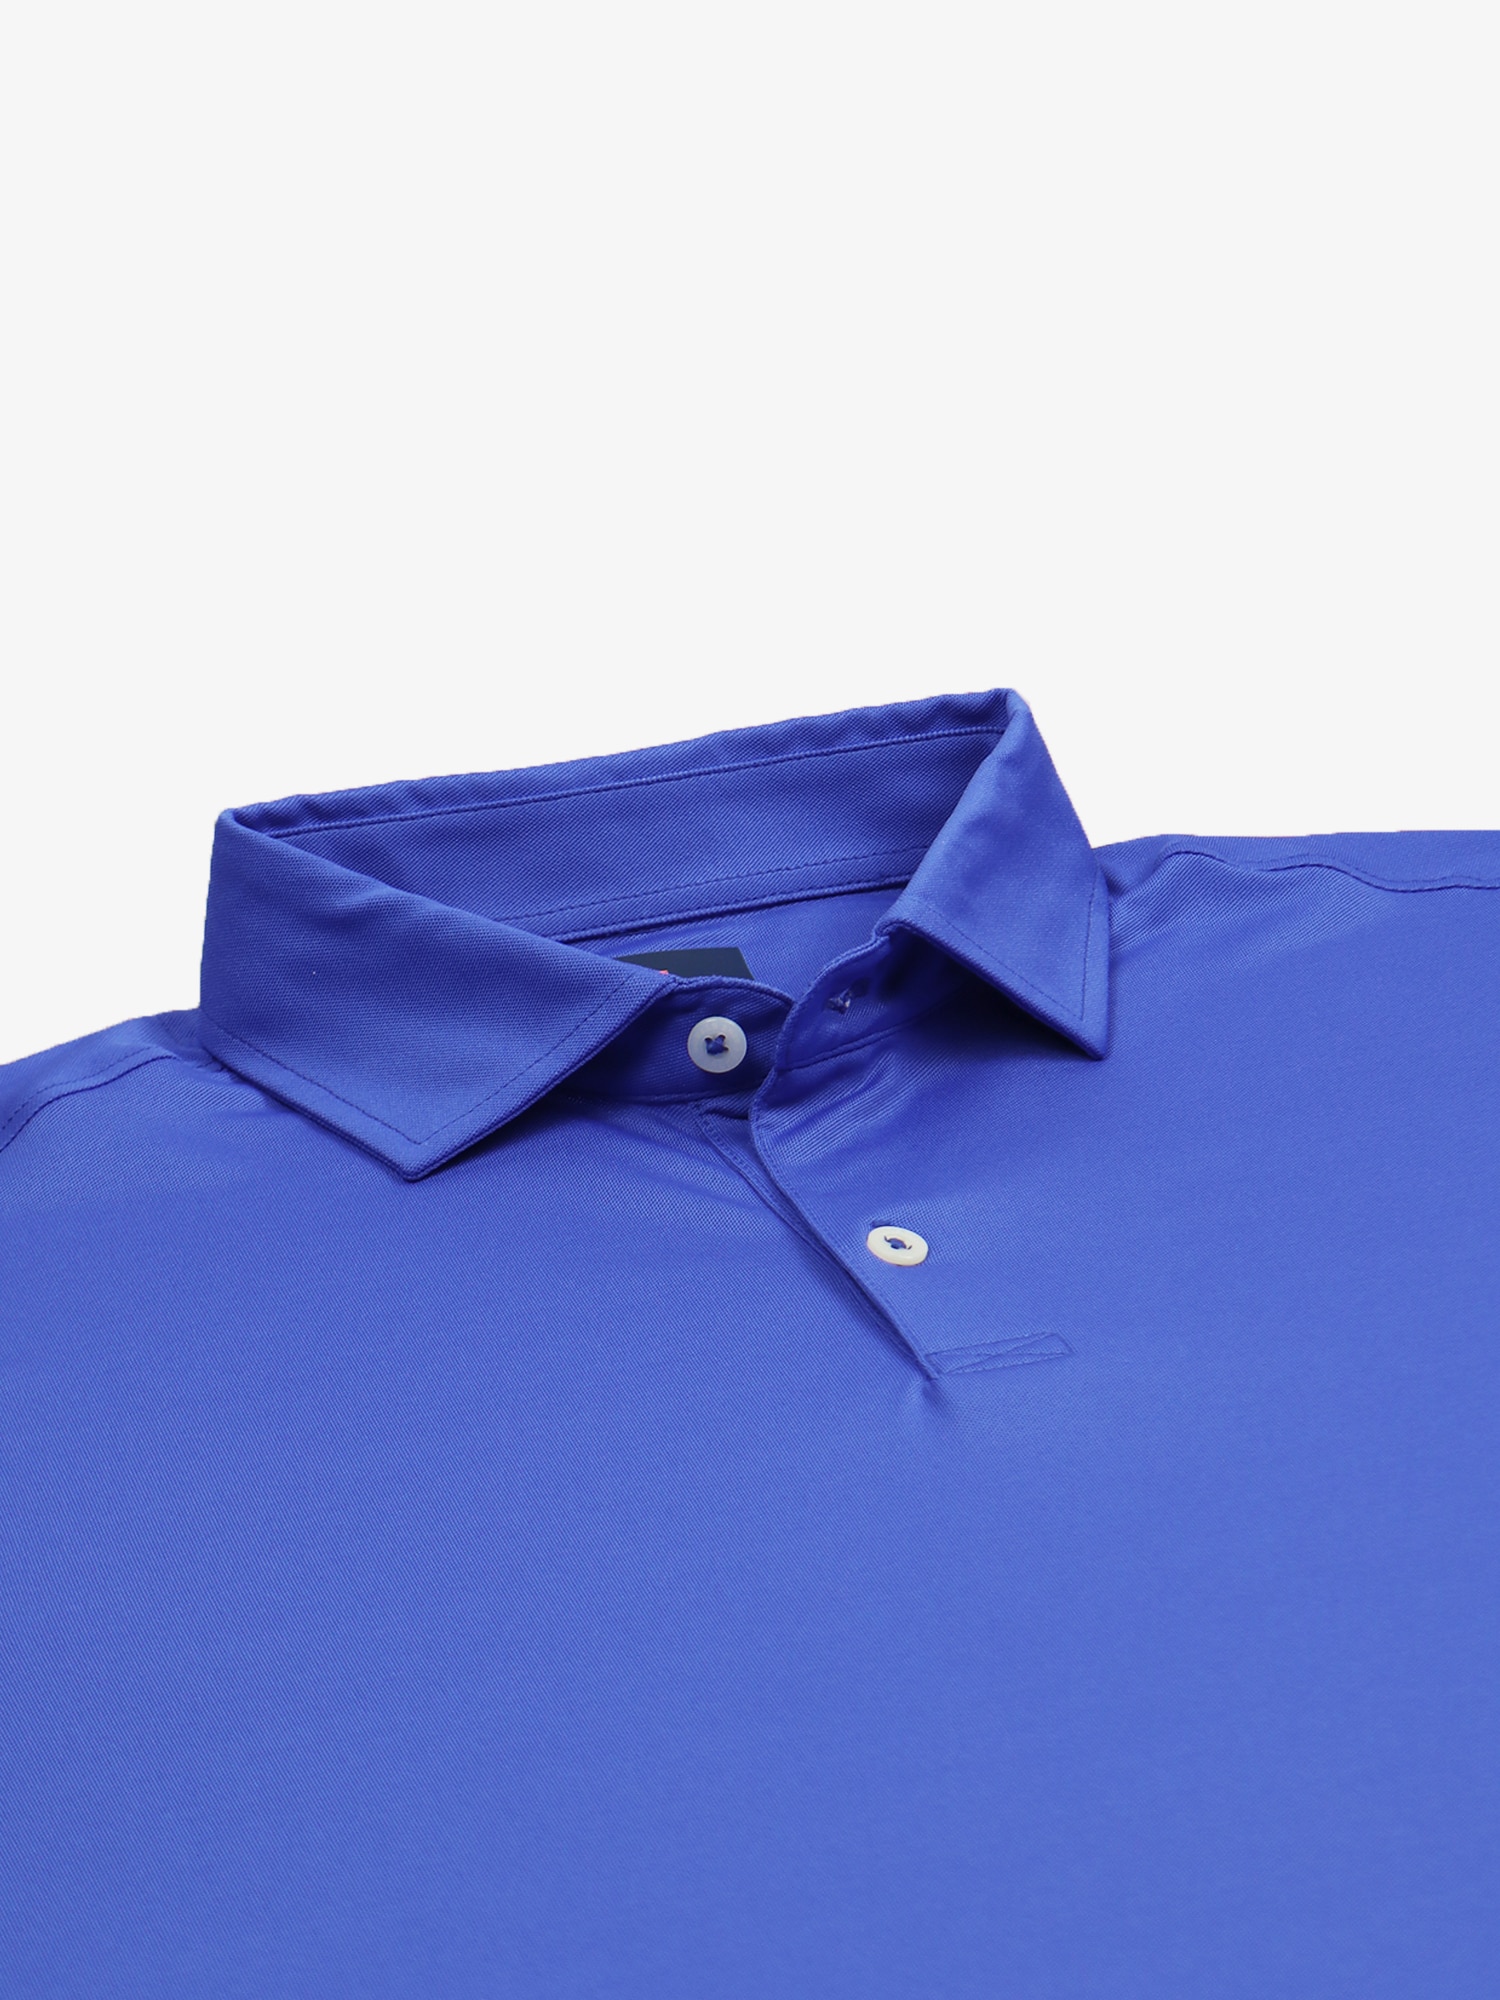 Men's Golf Polo Shirt Quick Dry Sun Protection Polo Shirts - Black / S